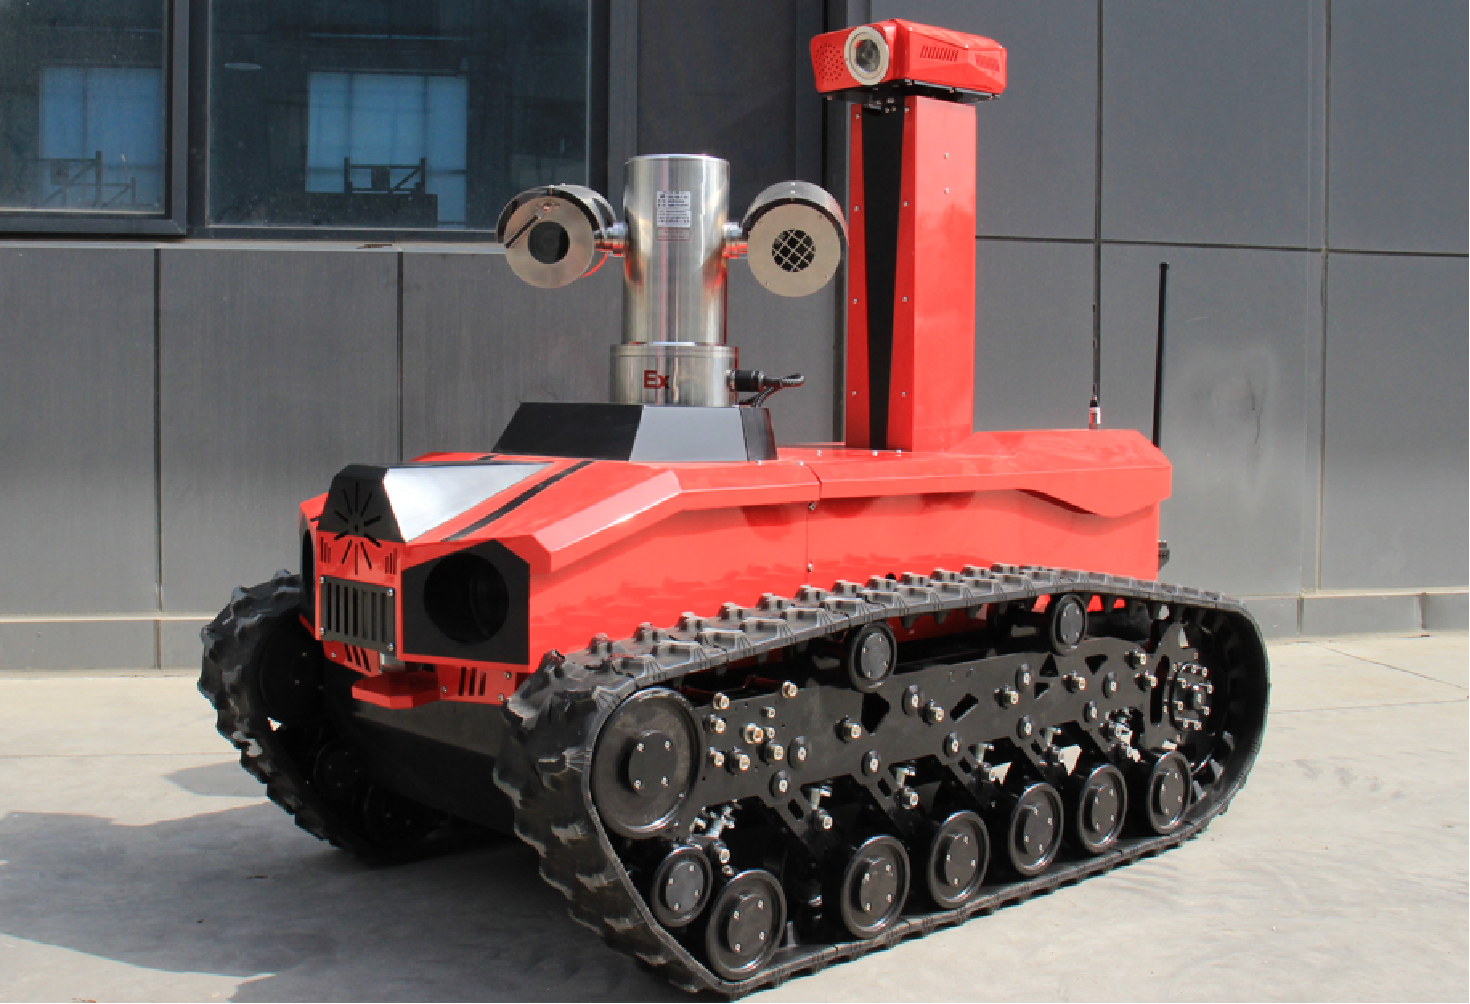  Robot bombero con batería, Control remoto inteligente, robótica, lucha contra incendios, RXR-MC80BD